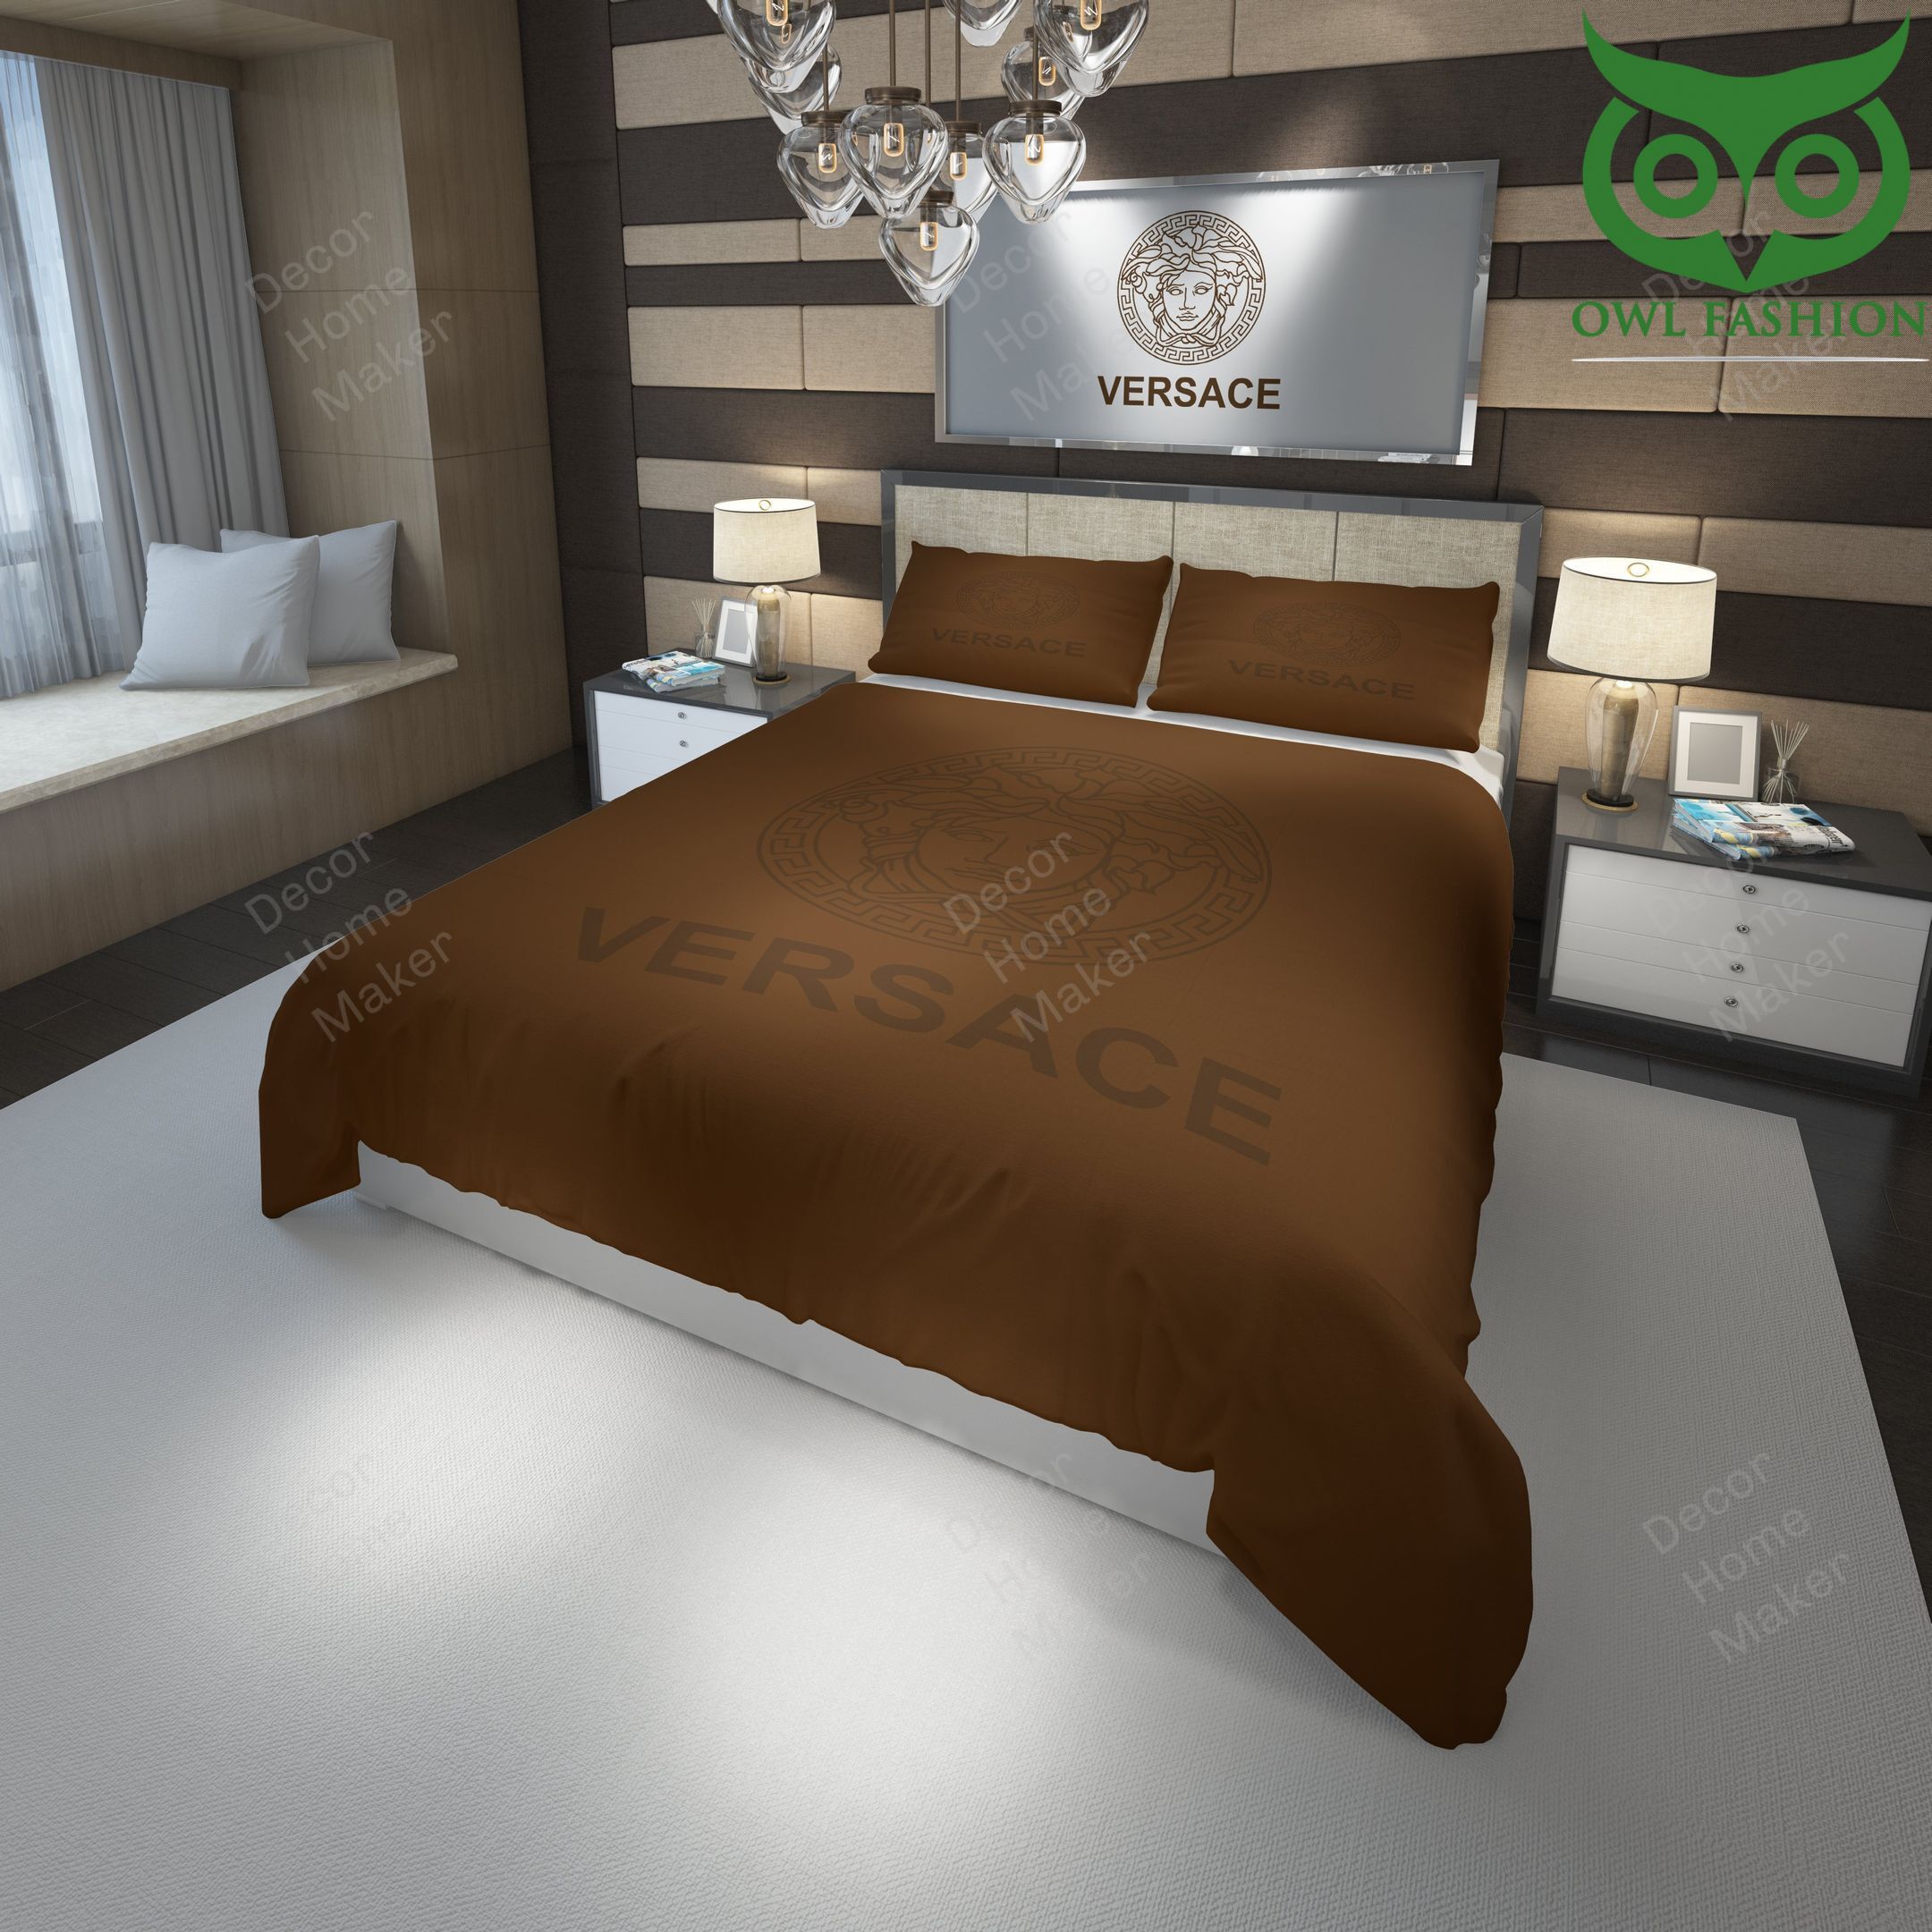 Versace full brown luxury bedding set